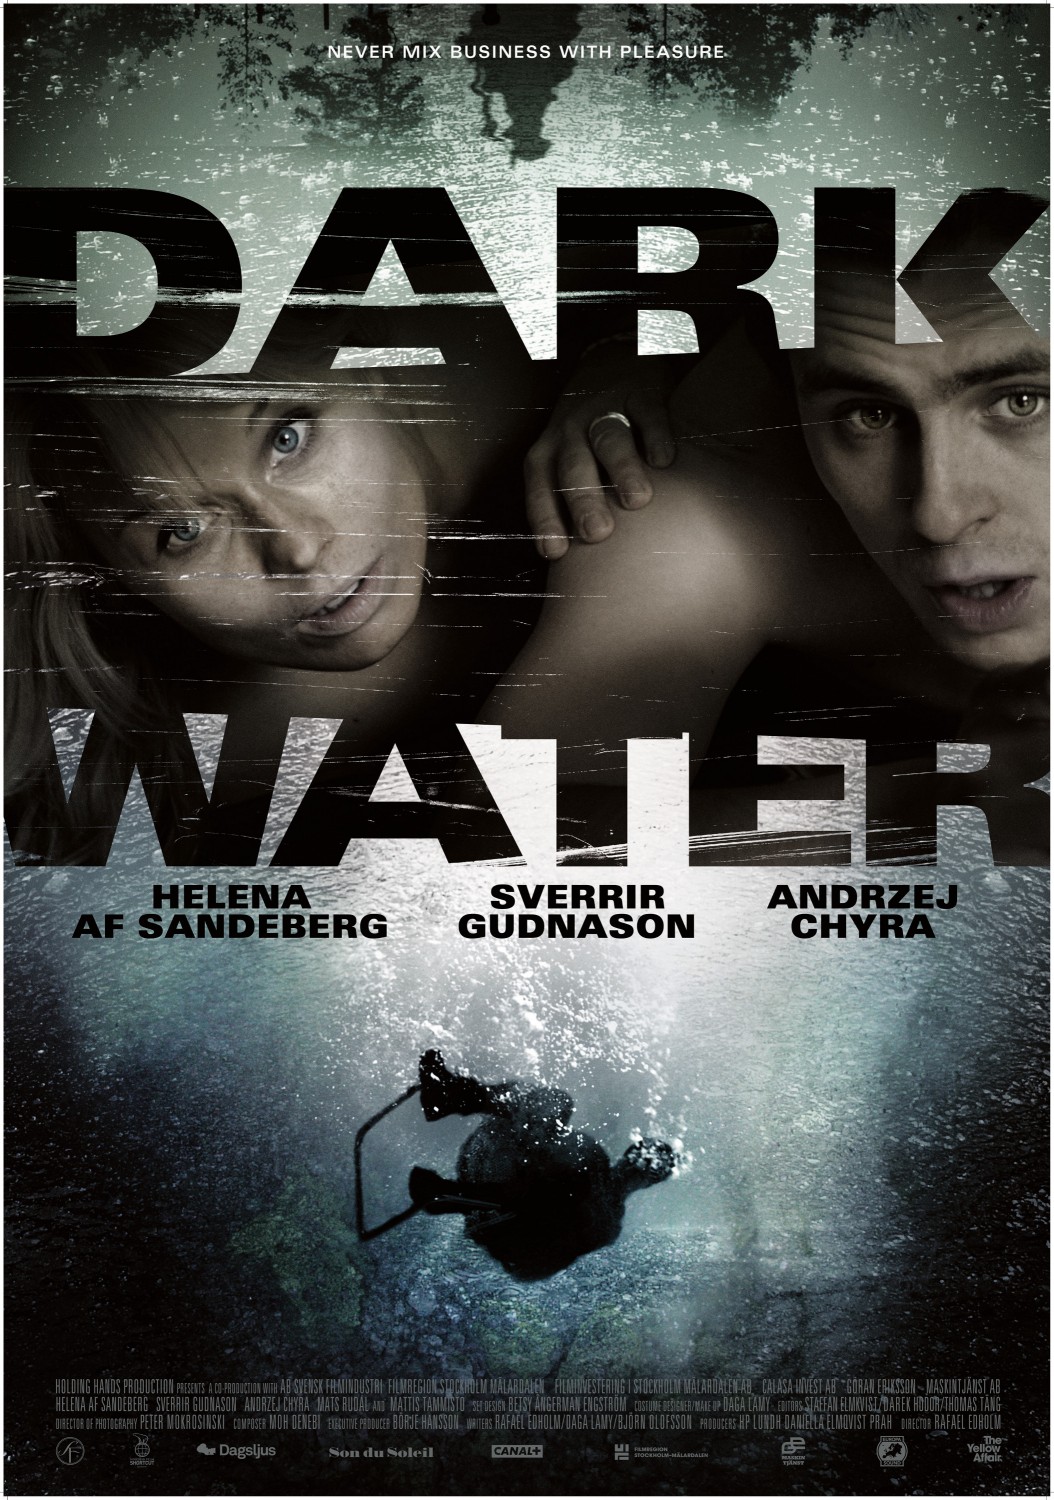 Extra Large Movie Poster Image for Mörkt vatten 